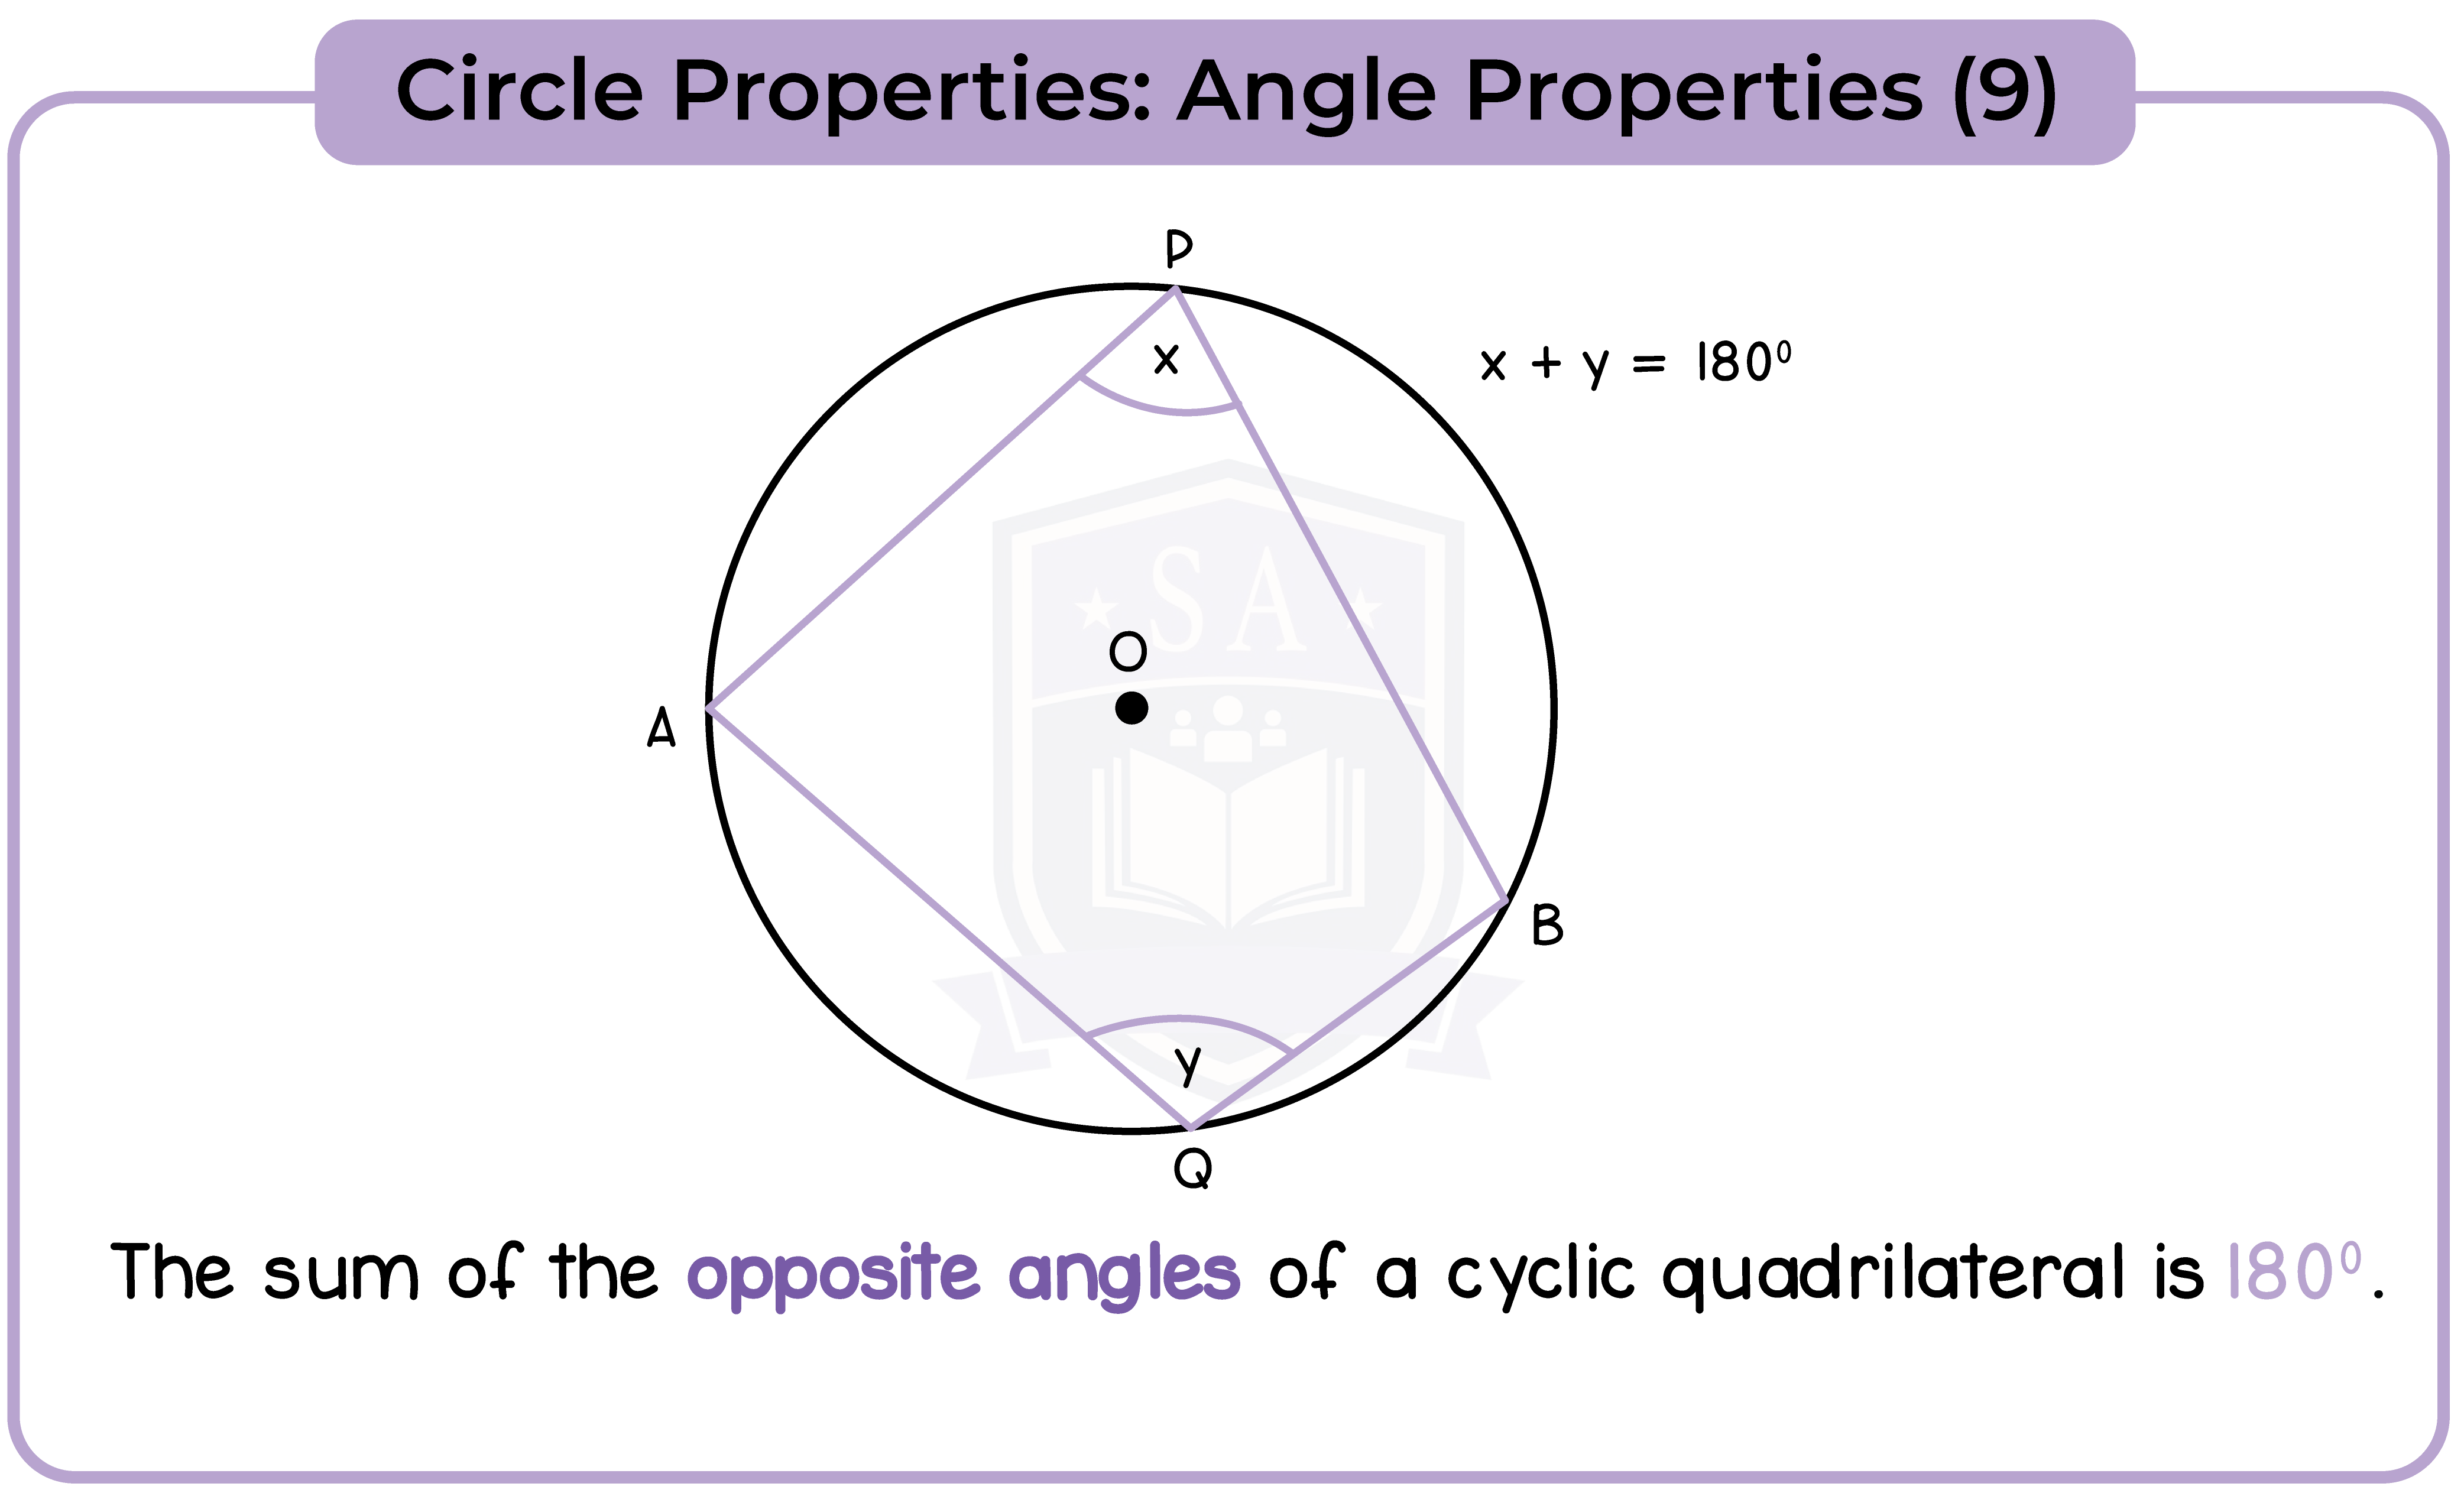 edexcel_igcse_mathematics a_topic 30_circle properties_013_Circle Properties: Angle Properties (9)